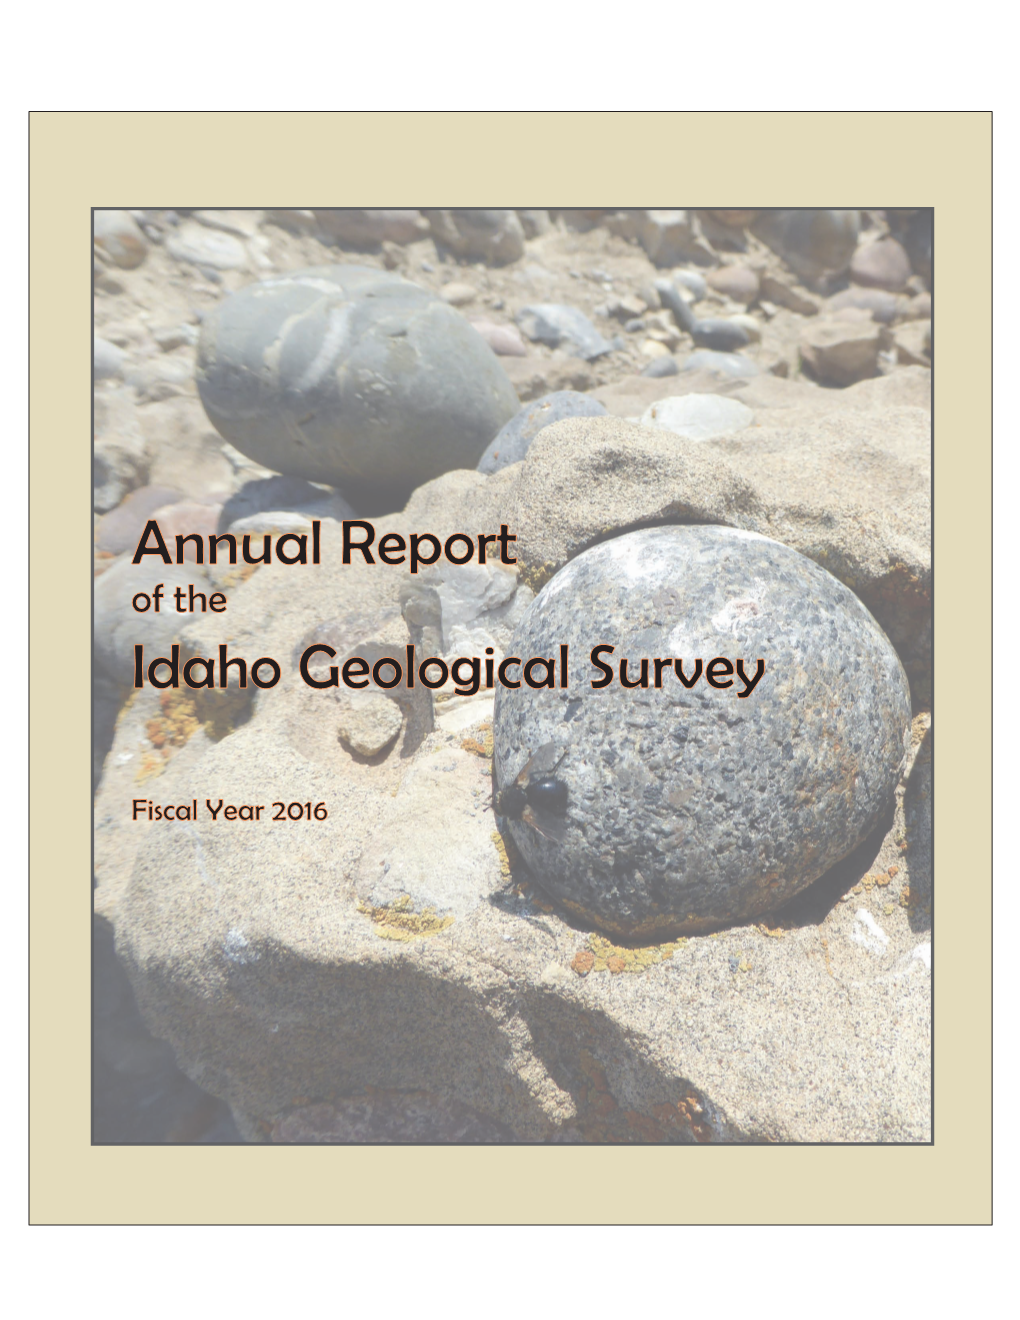 Annual Report, Idaho Geological Survey